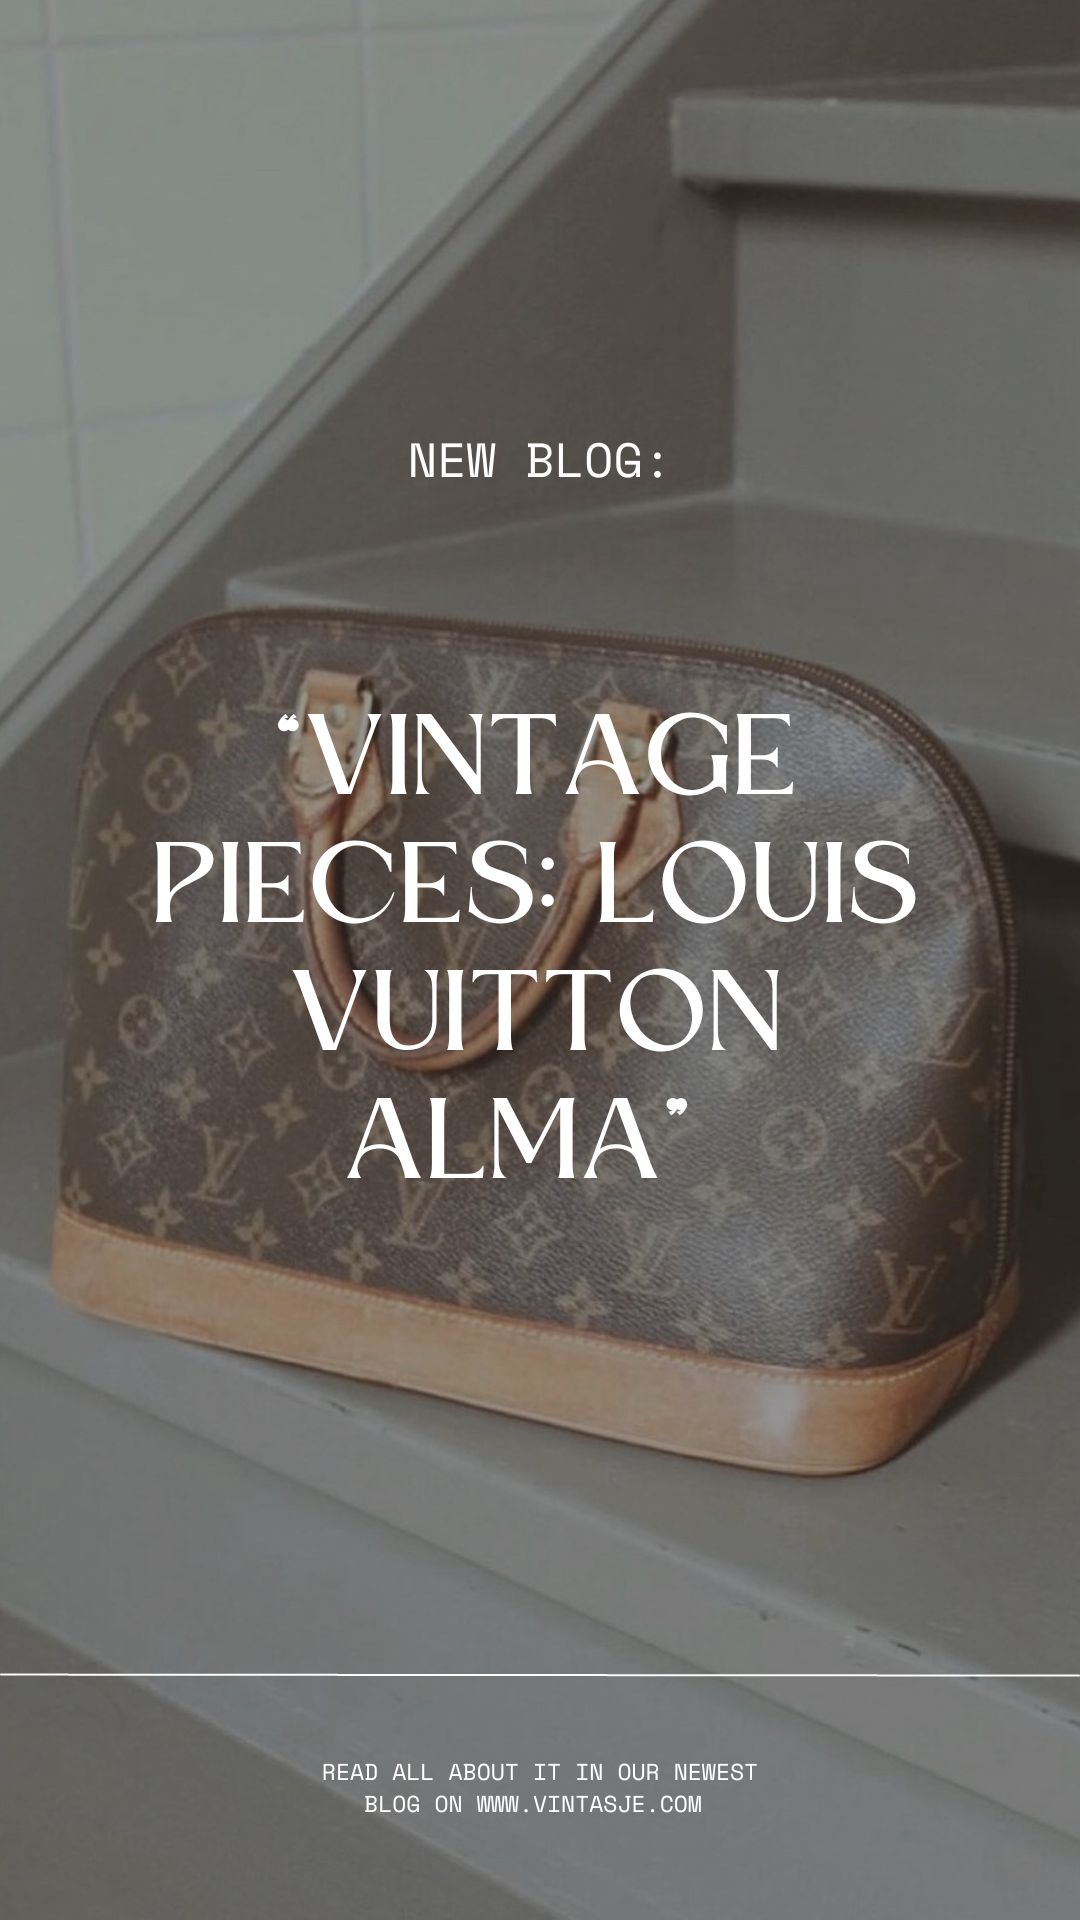 Vintage pieces: The Louis Vuitton Alma - Vintasje